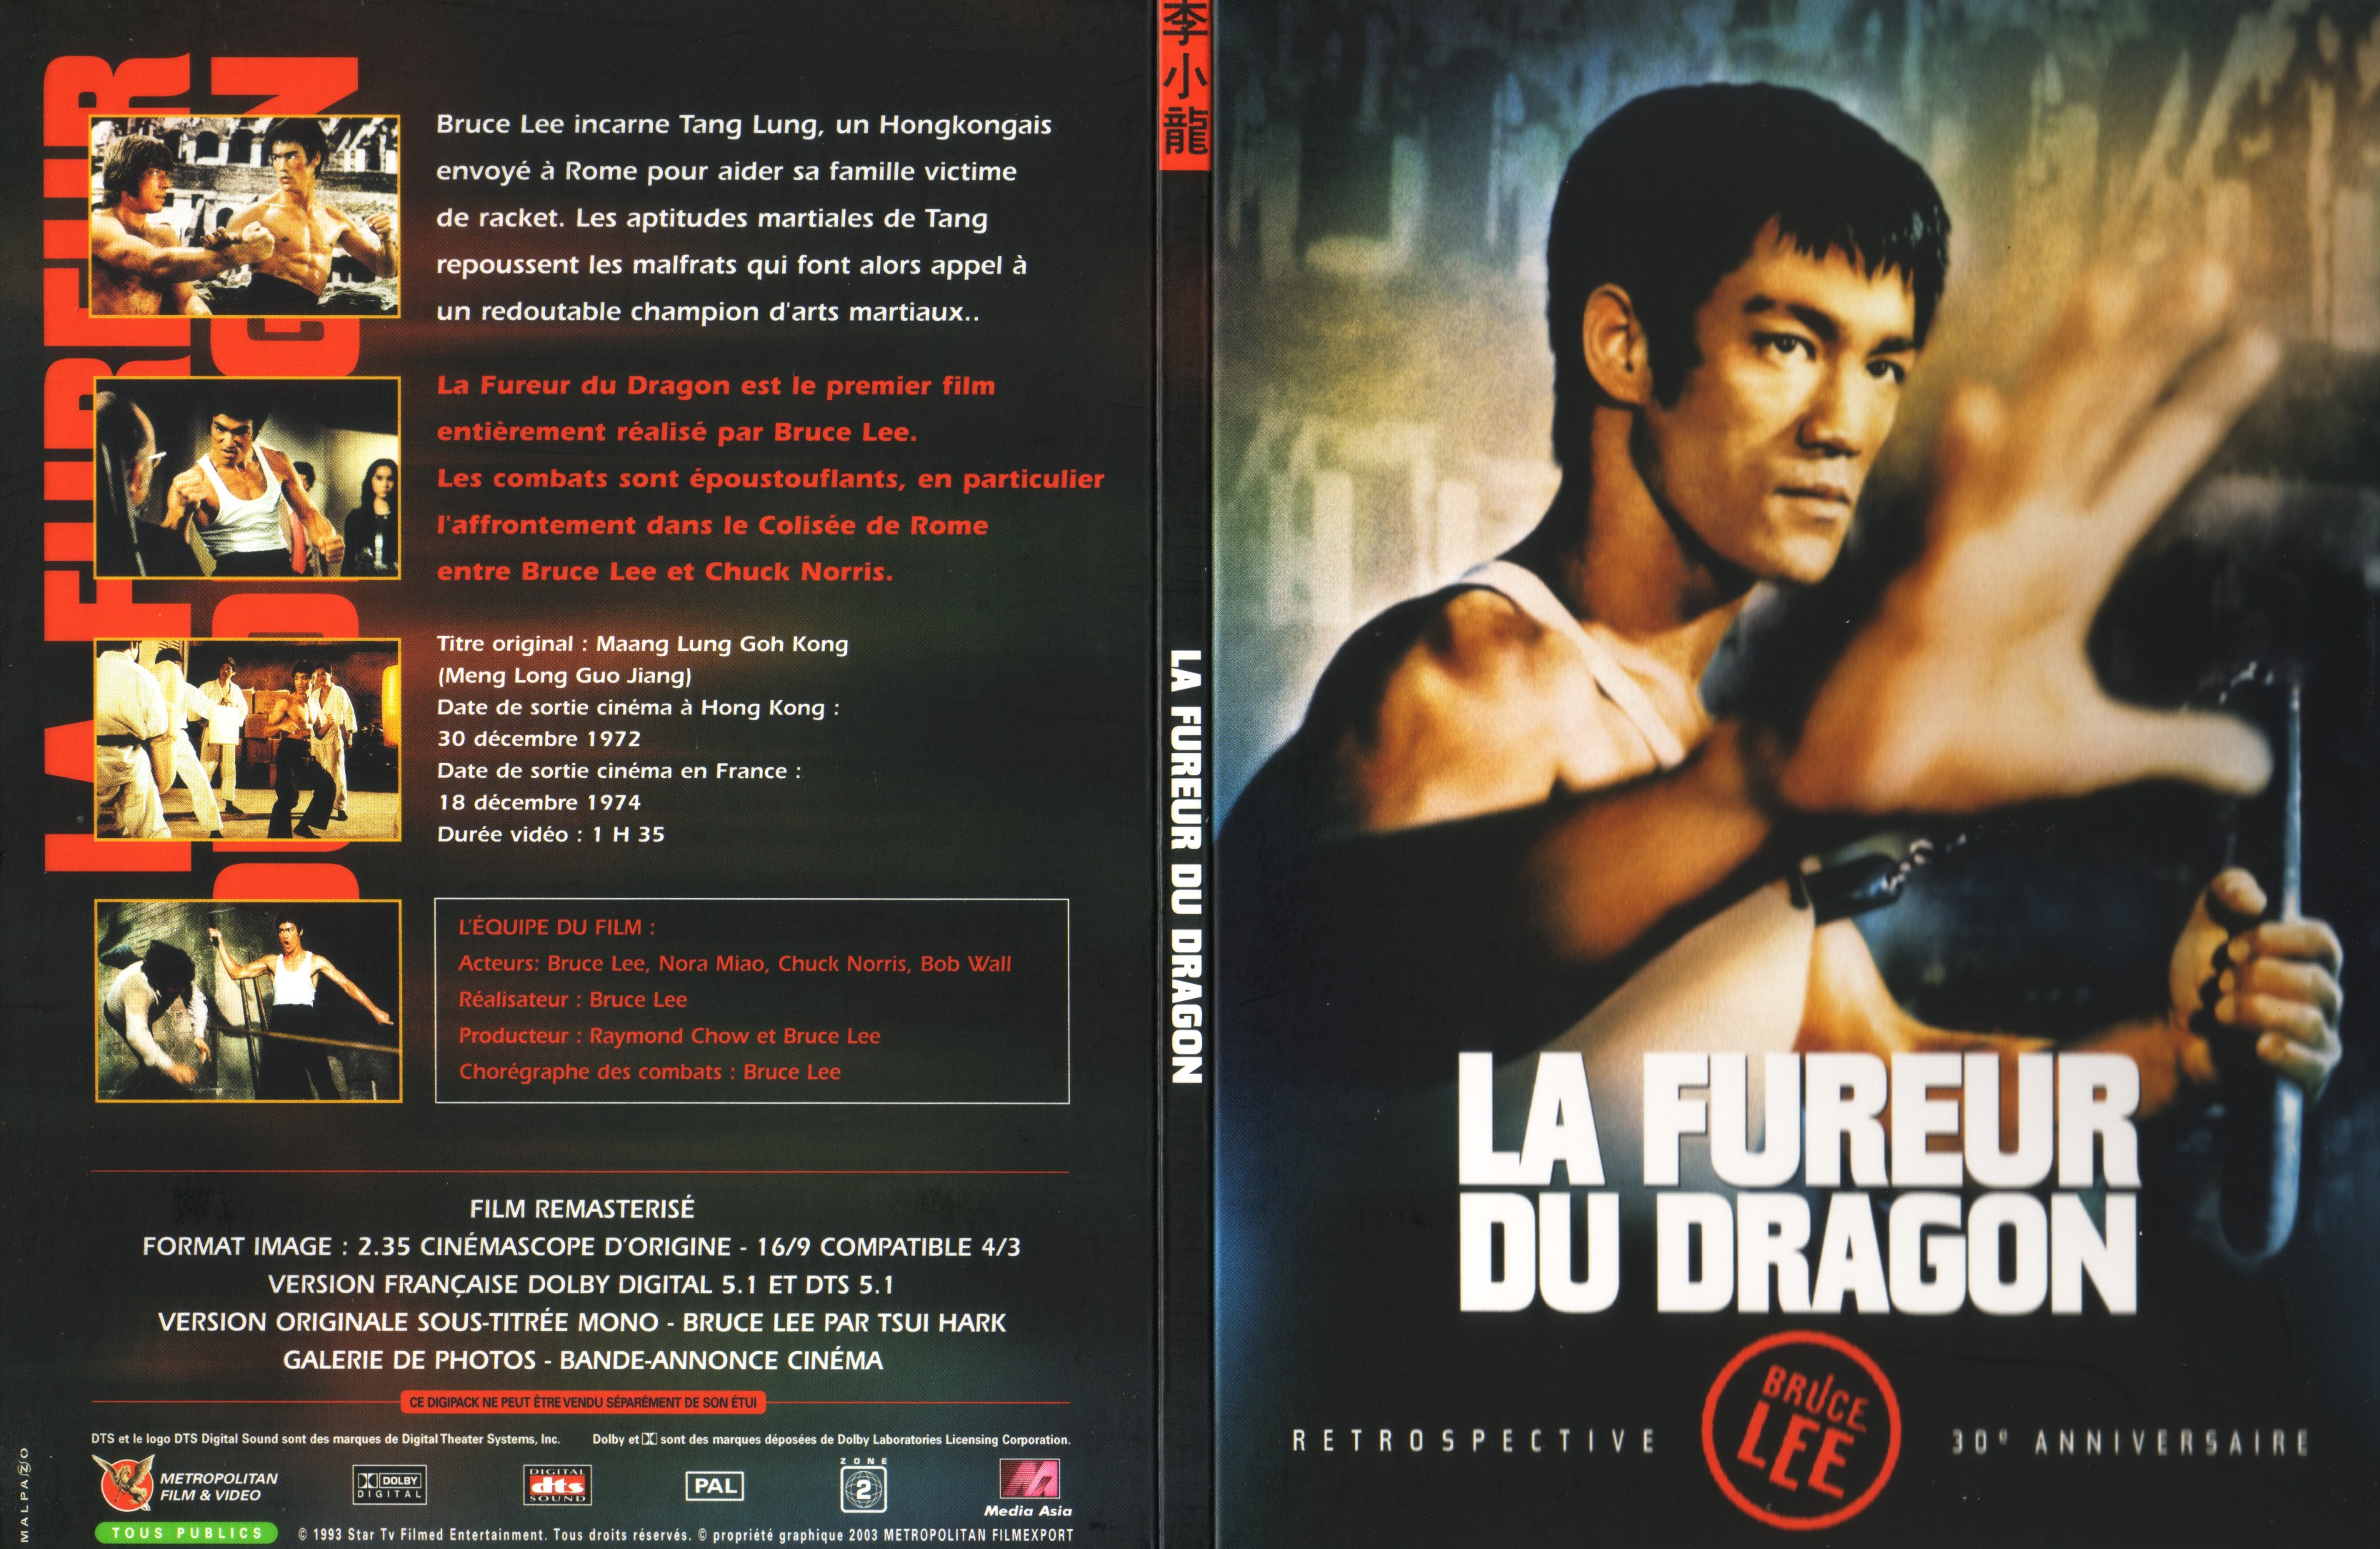 Jaquette DVD La fureur du dragon v2